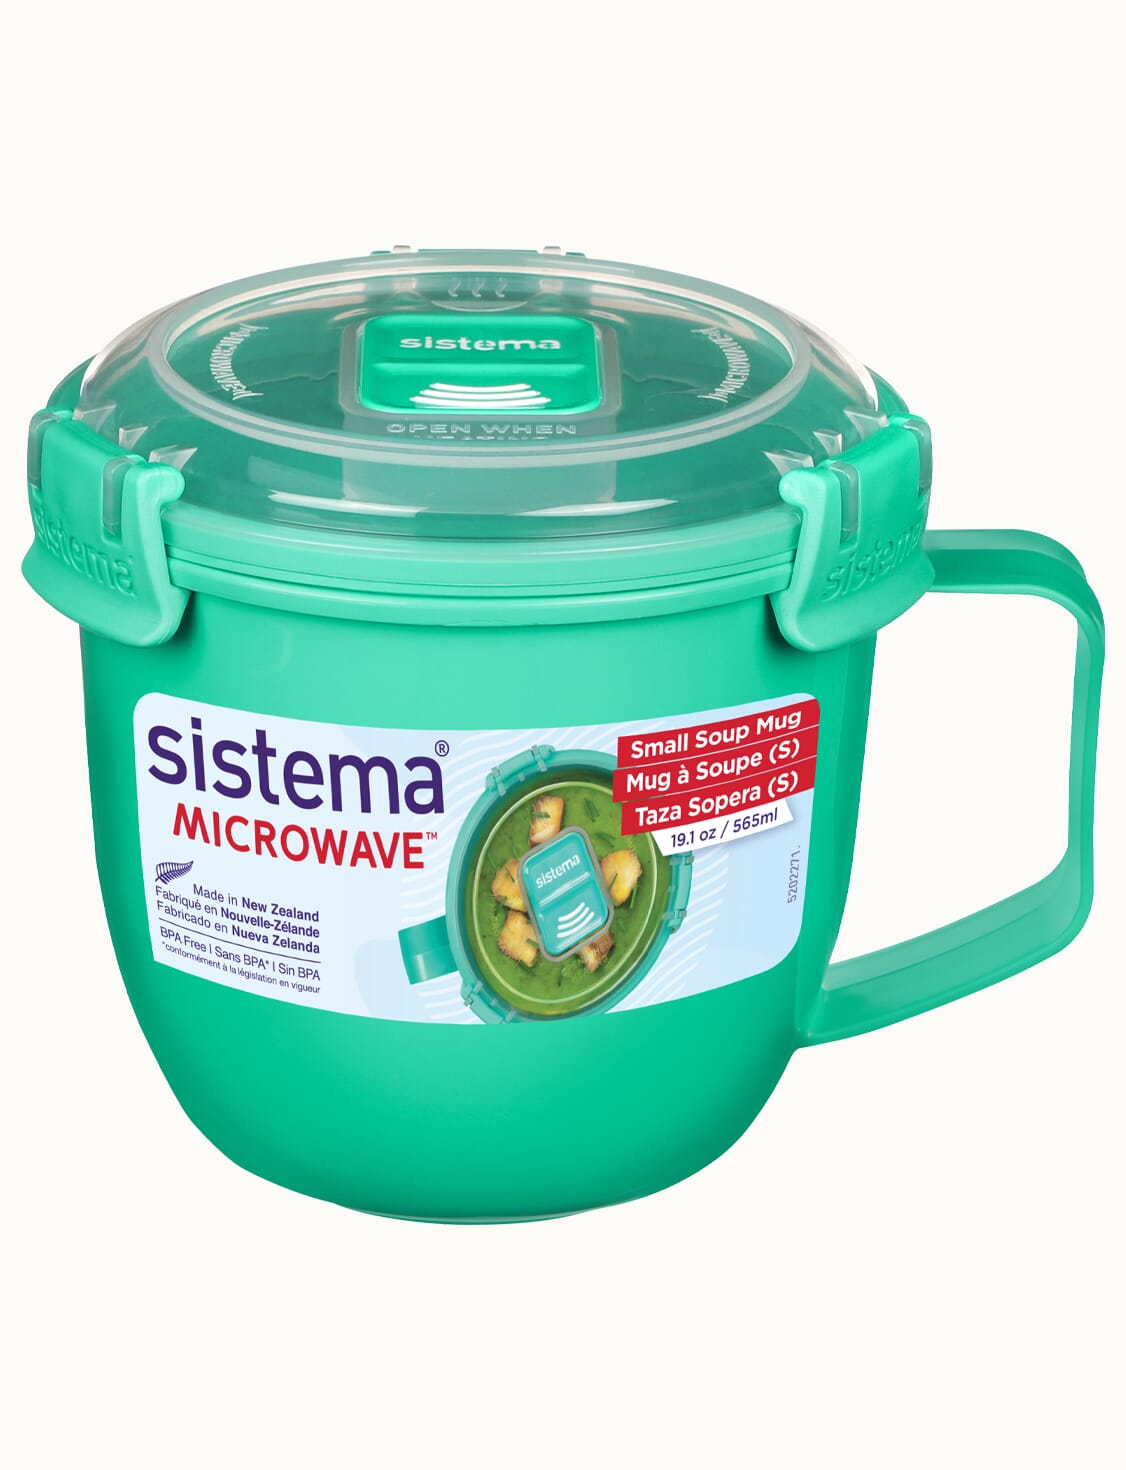 SISTEMA TO GO Soup Cup 565 ml 11xh10.5cm